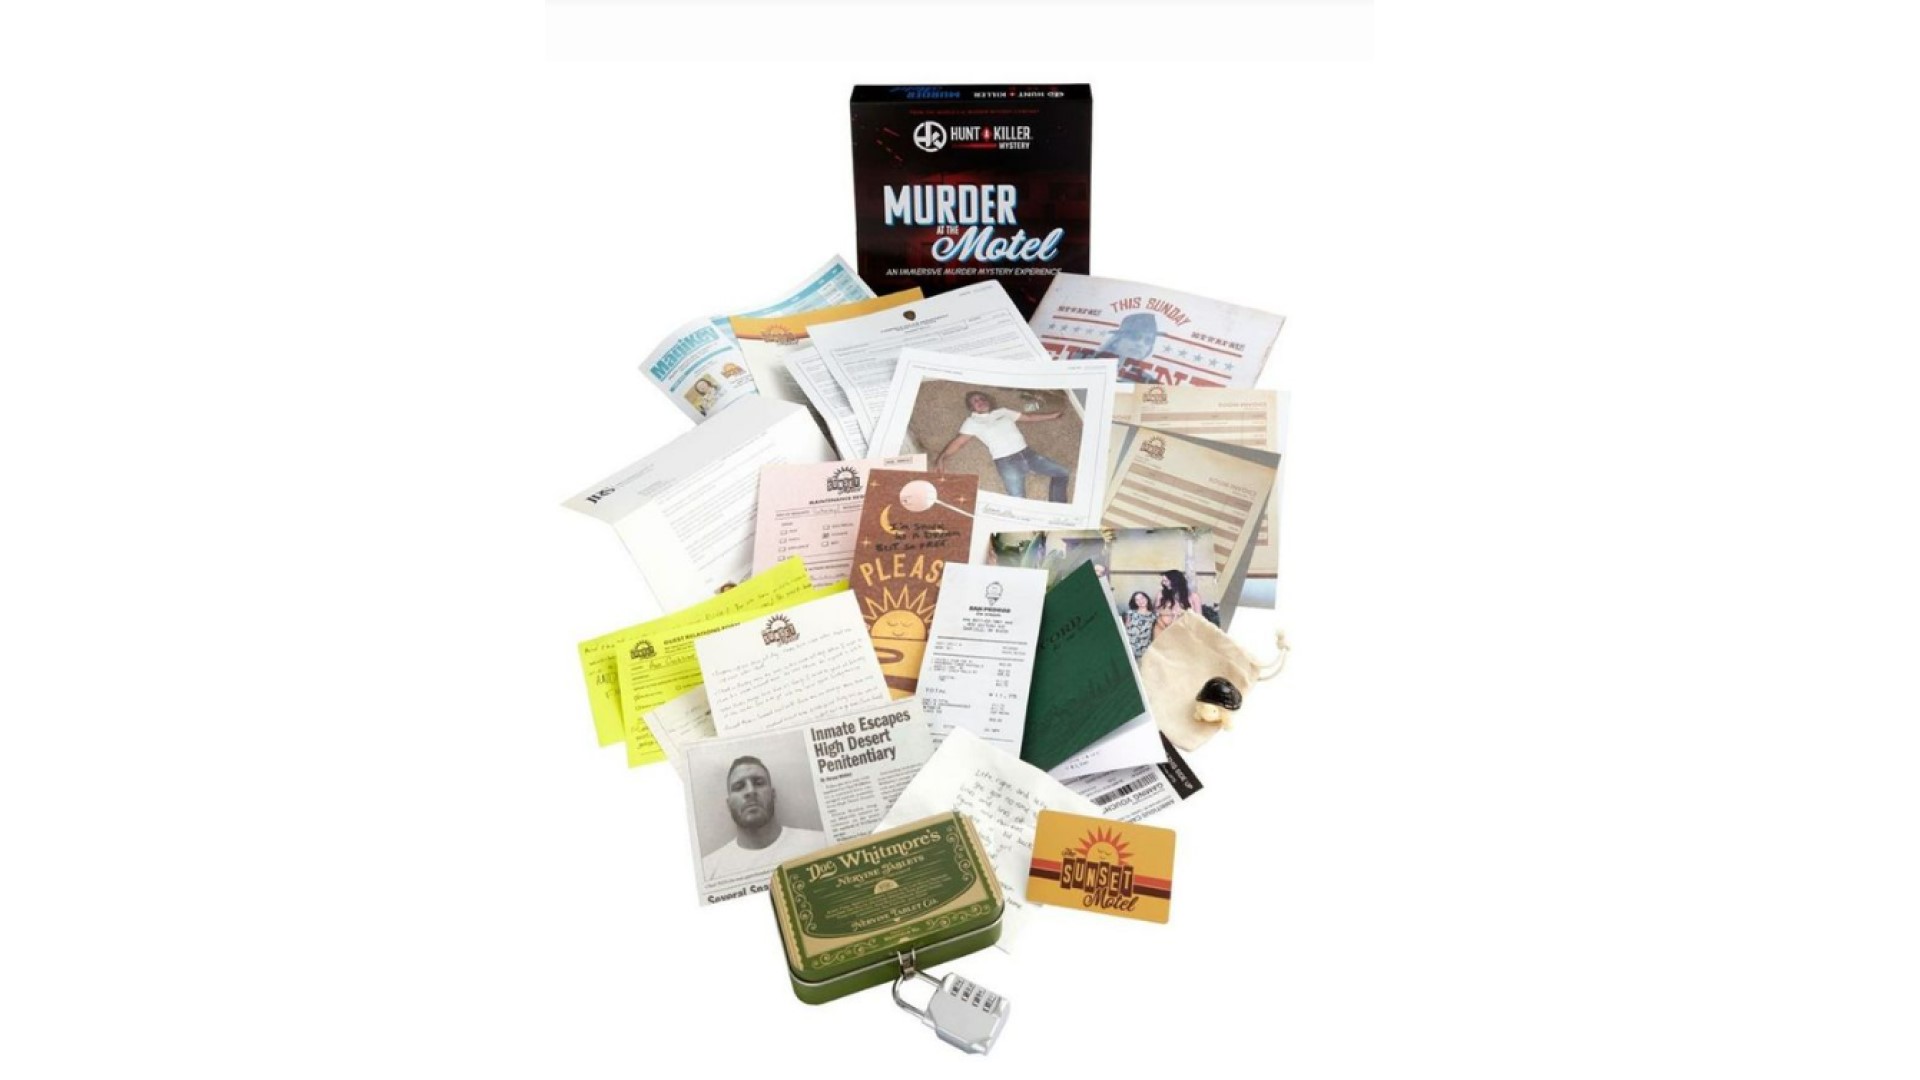 Murder Mystery Games, 17 Best in 2023